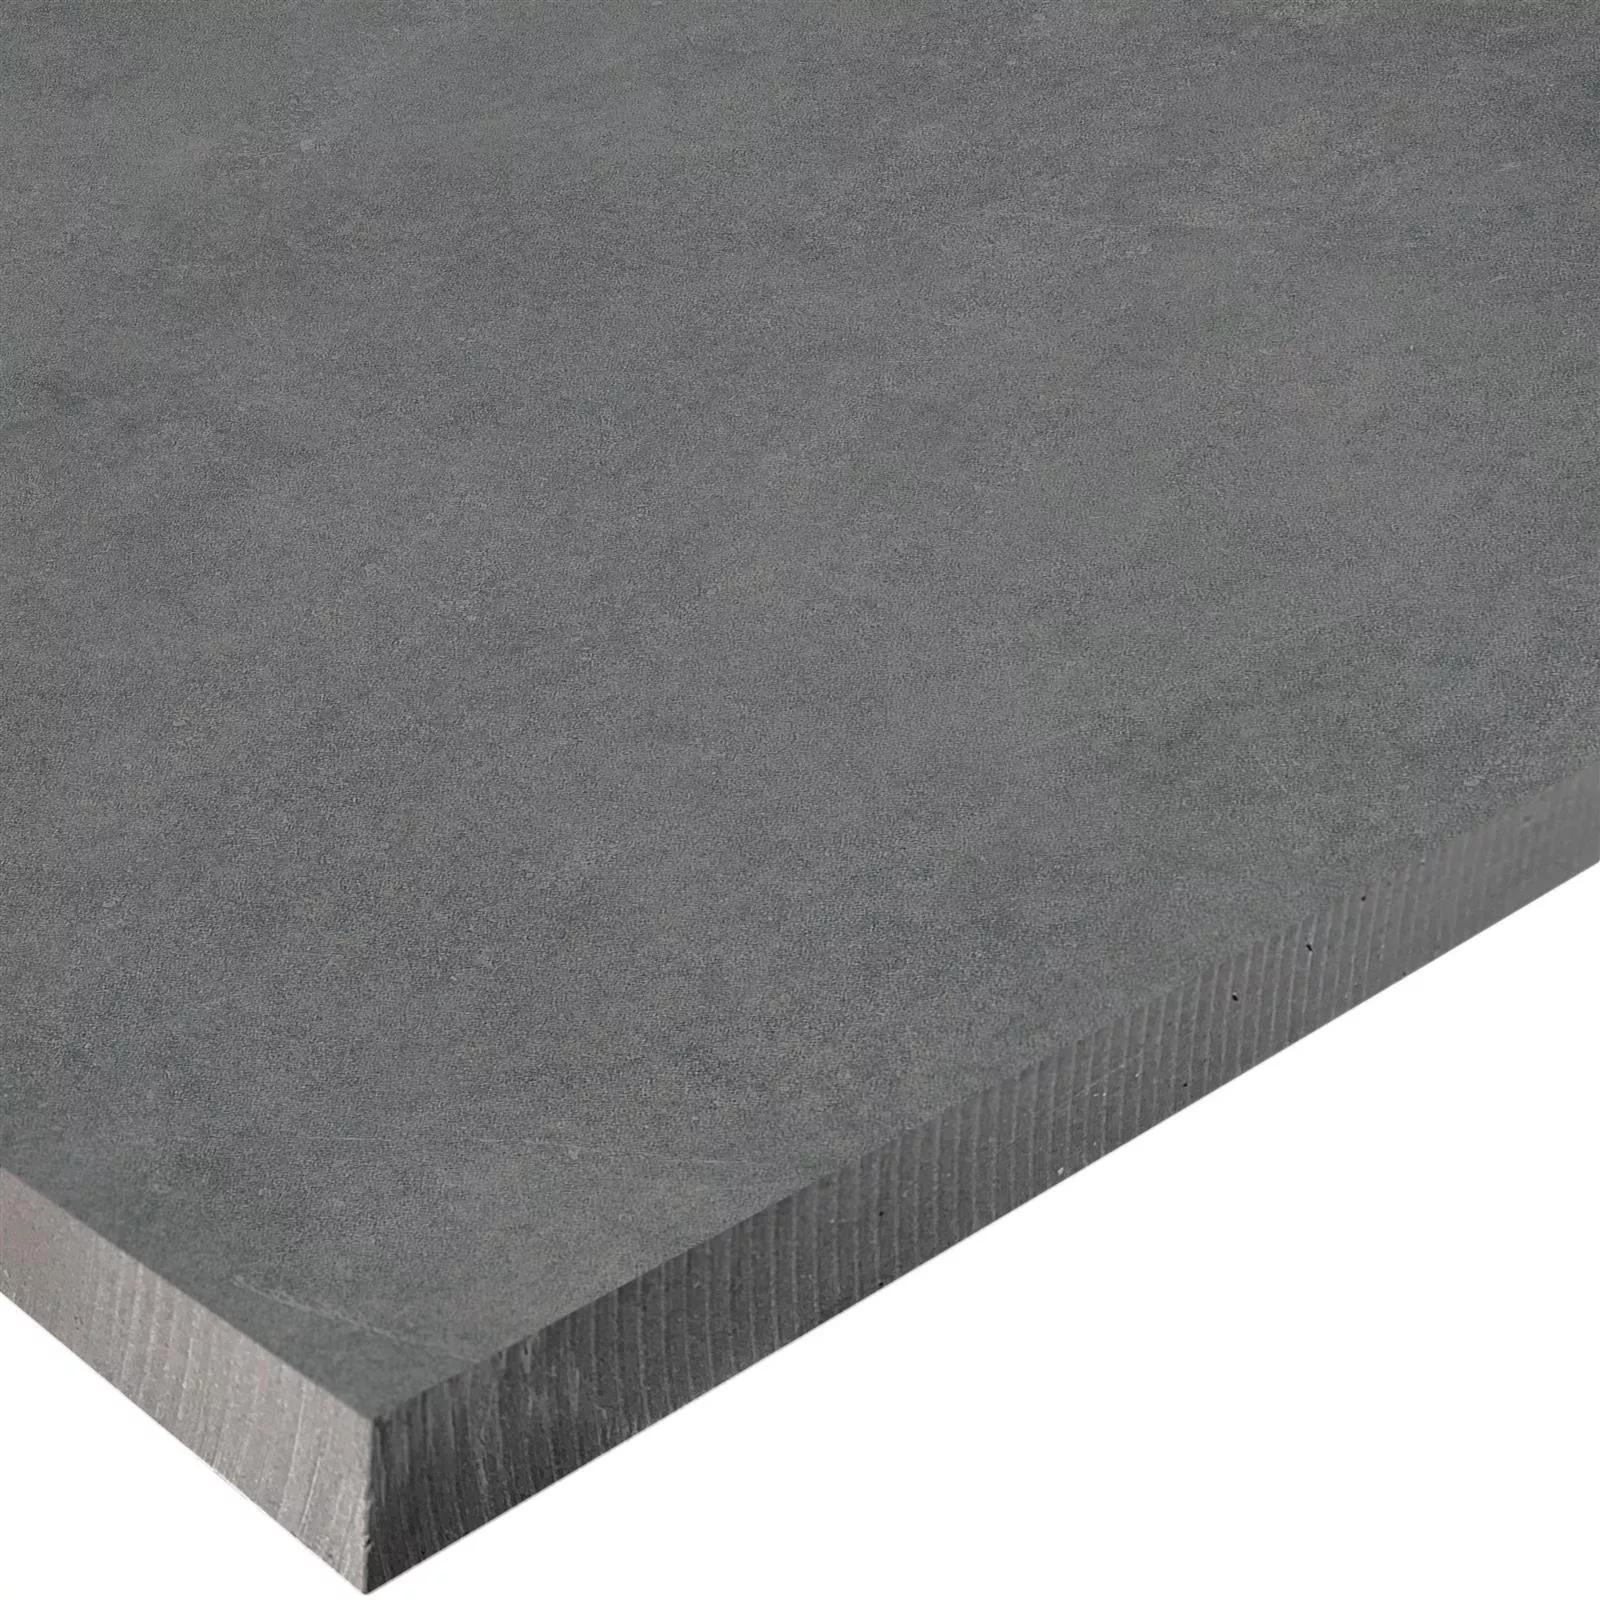 Terrace Tiles Cement Optic Newland Anthracite 60x60x3cm